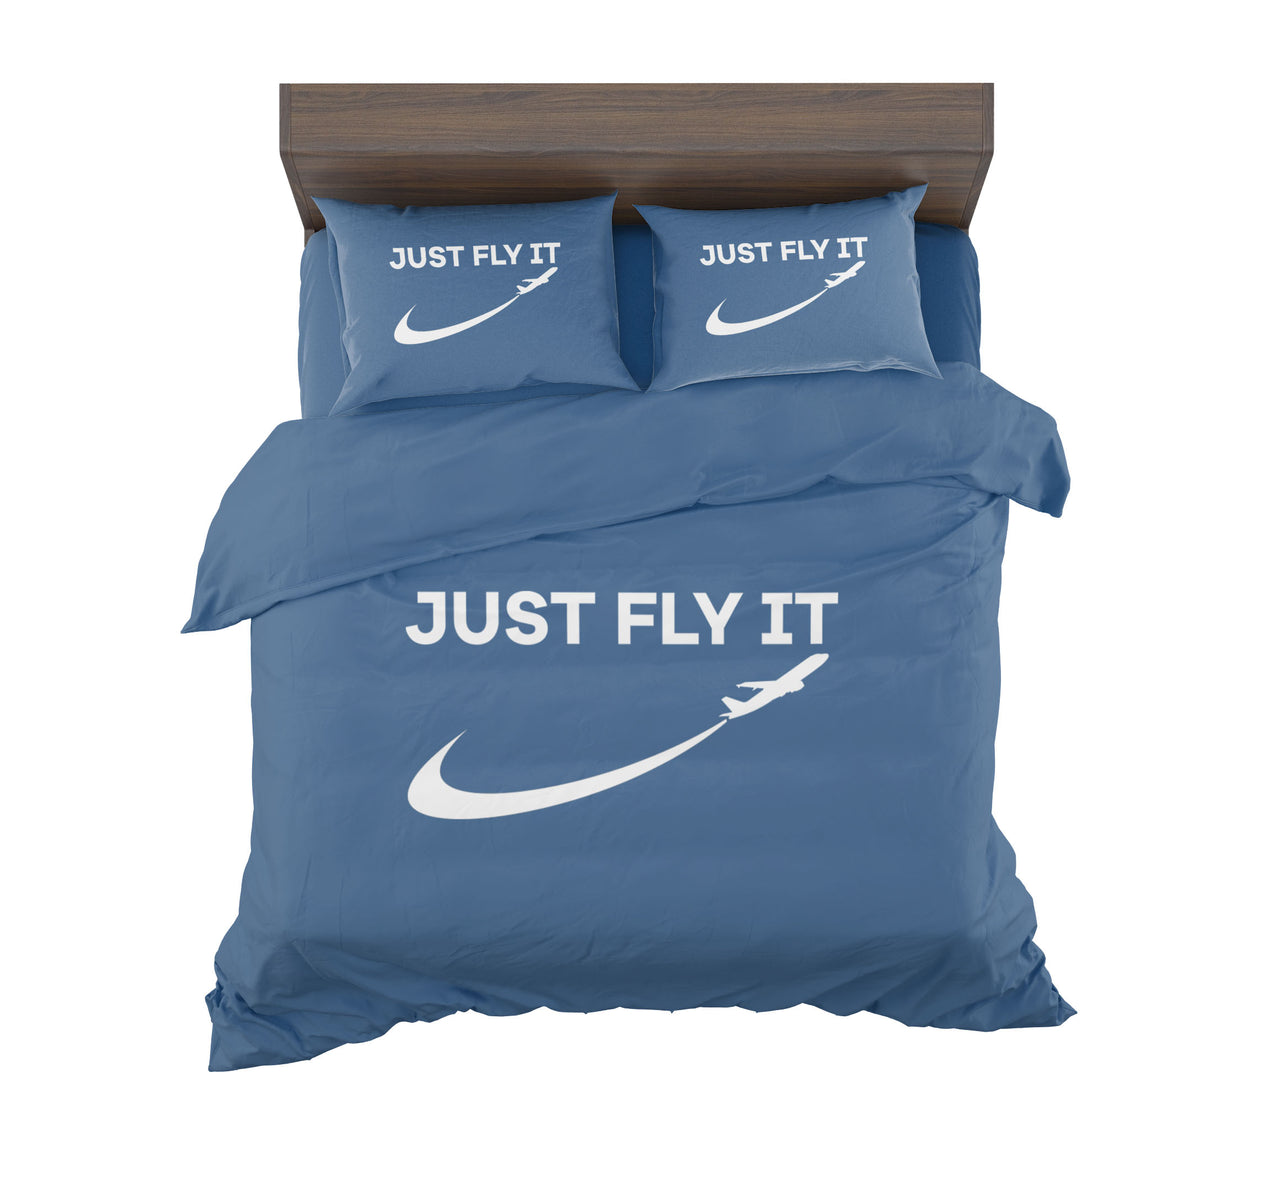 Just Fly It 2 Designed Bedding Sets